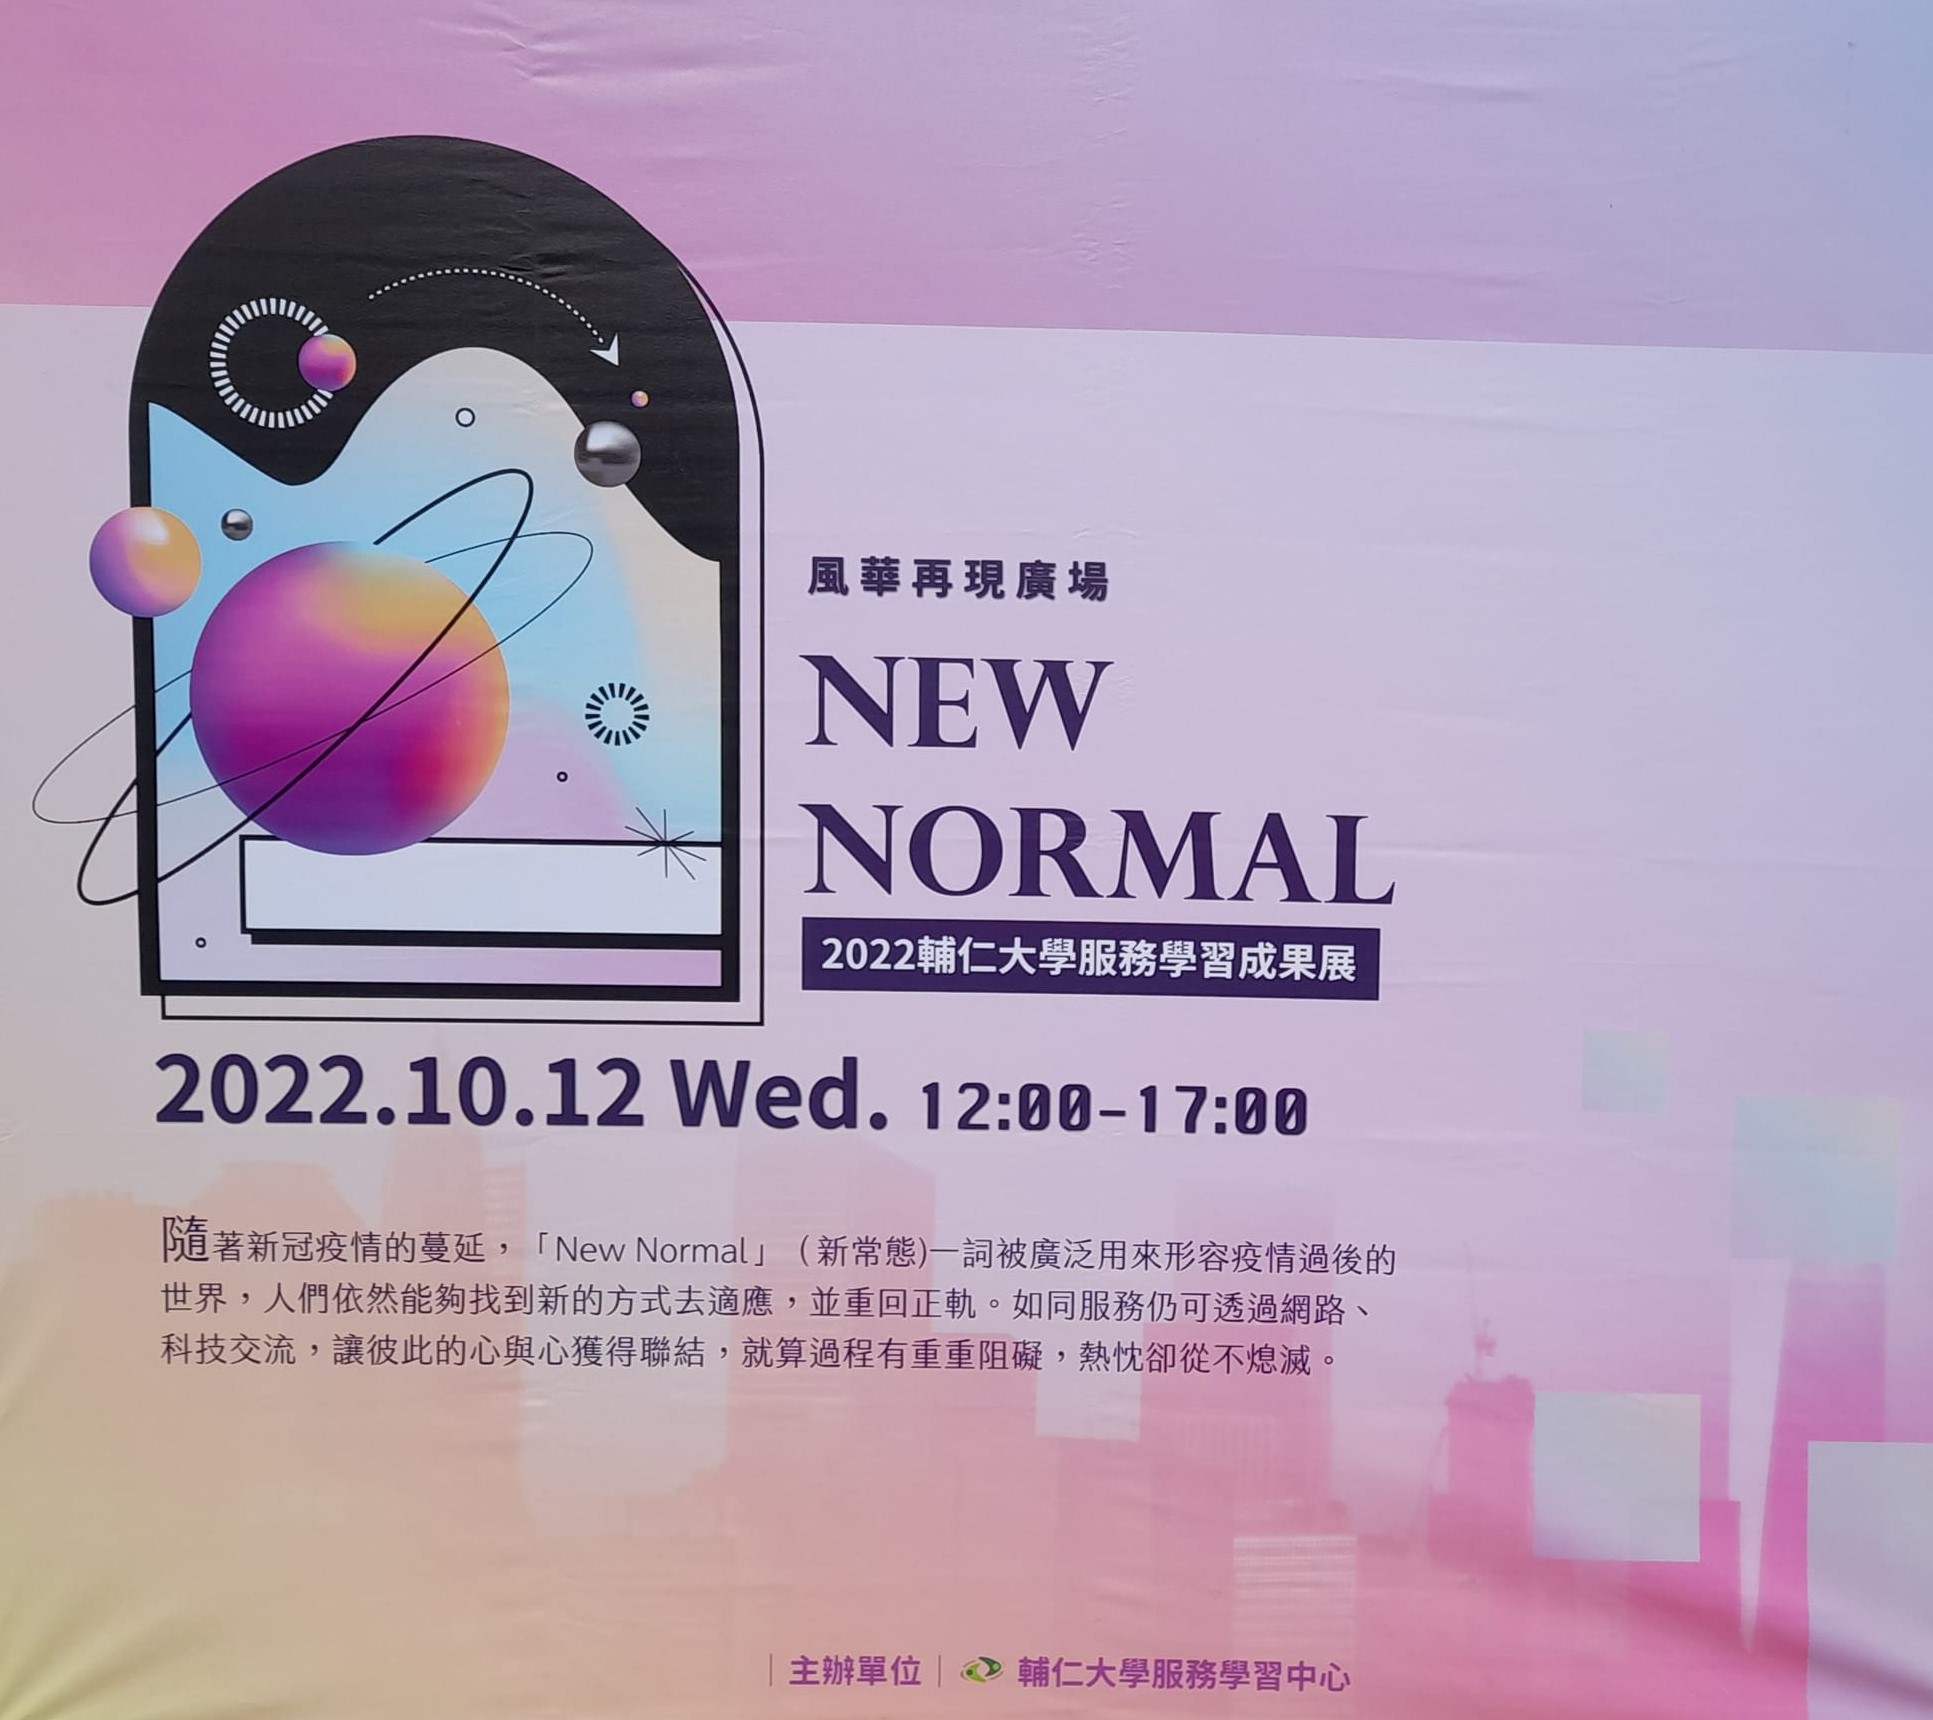 New Normal 2022服務學習成果展 我們的新常態，讓彼此的心與心更聯結